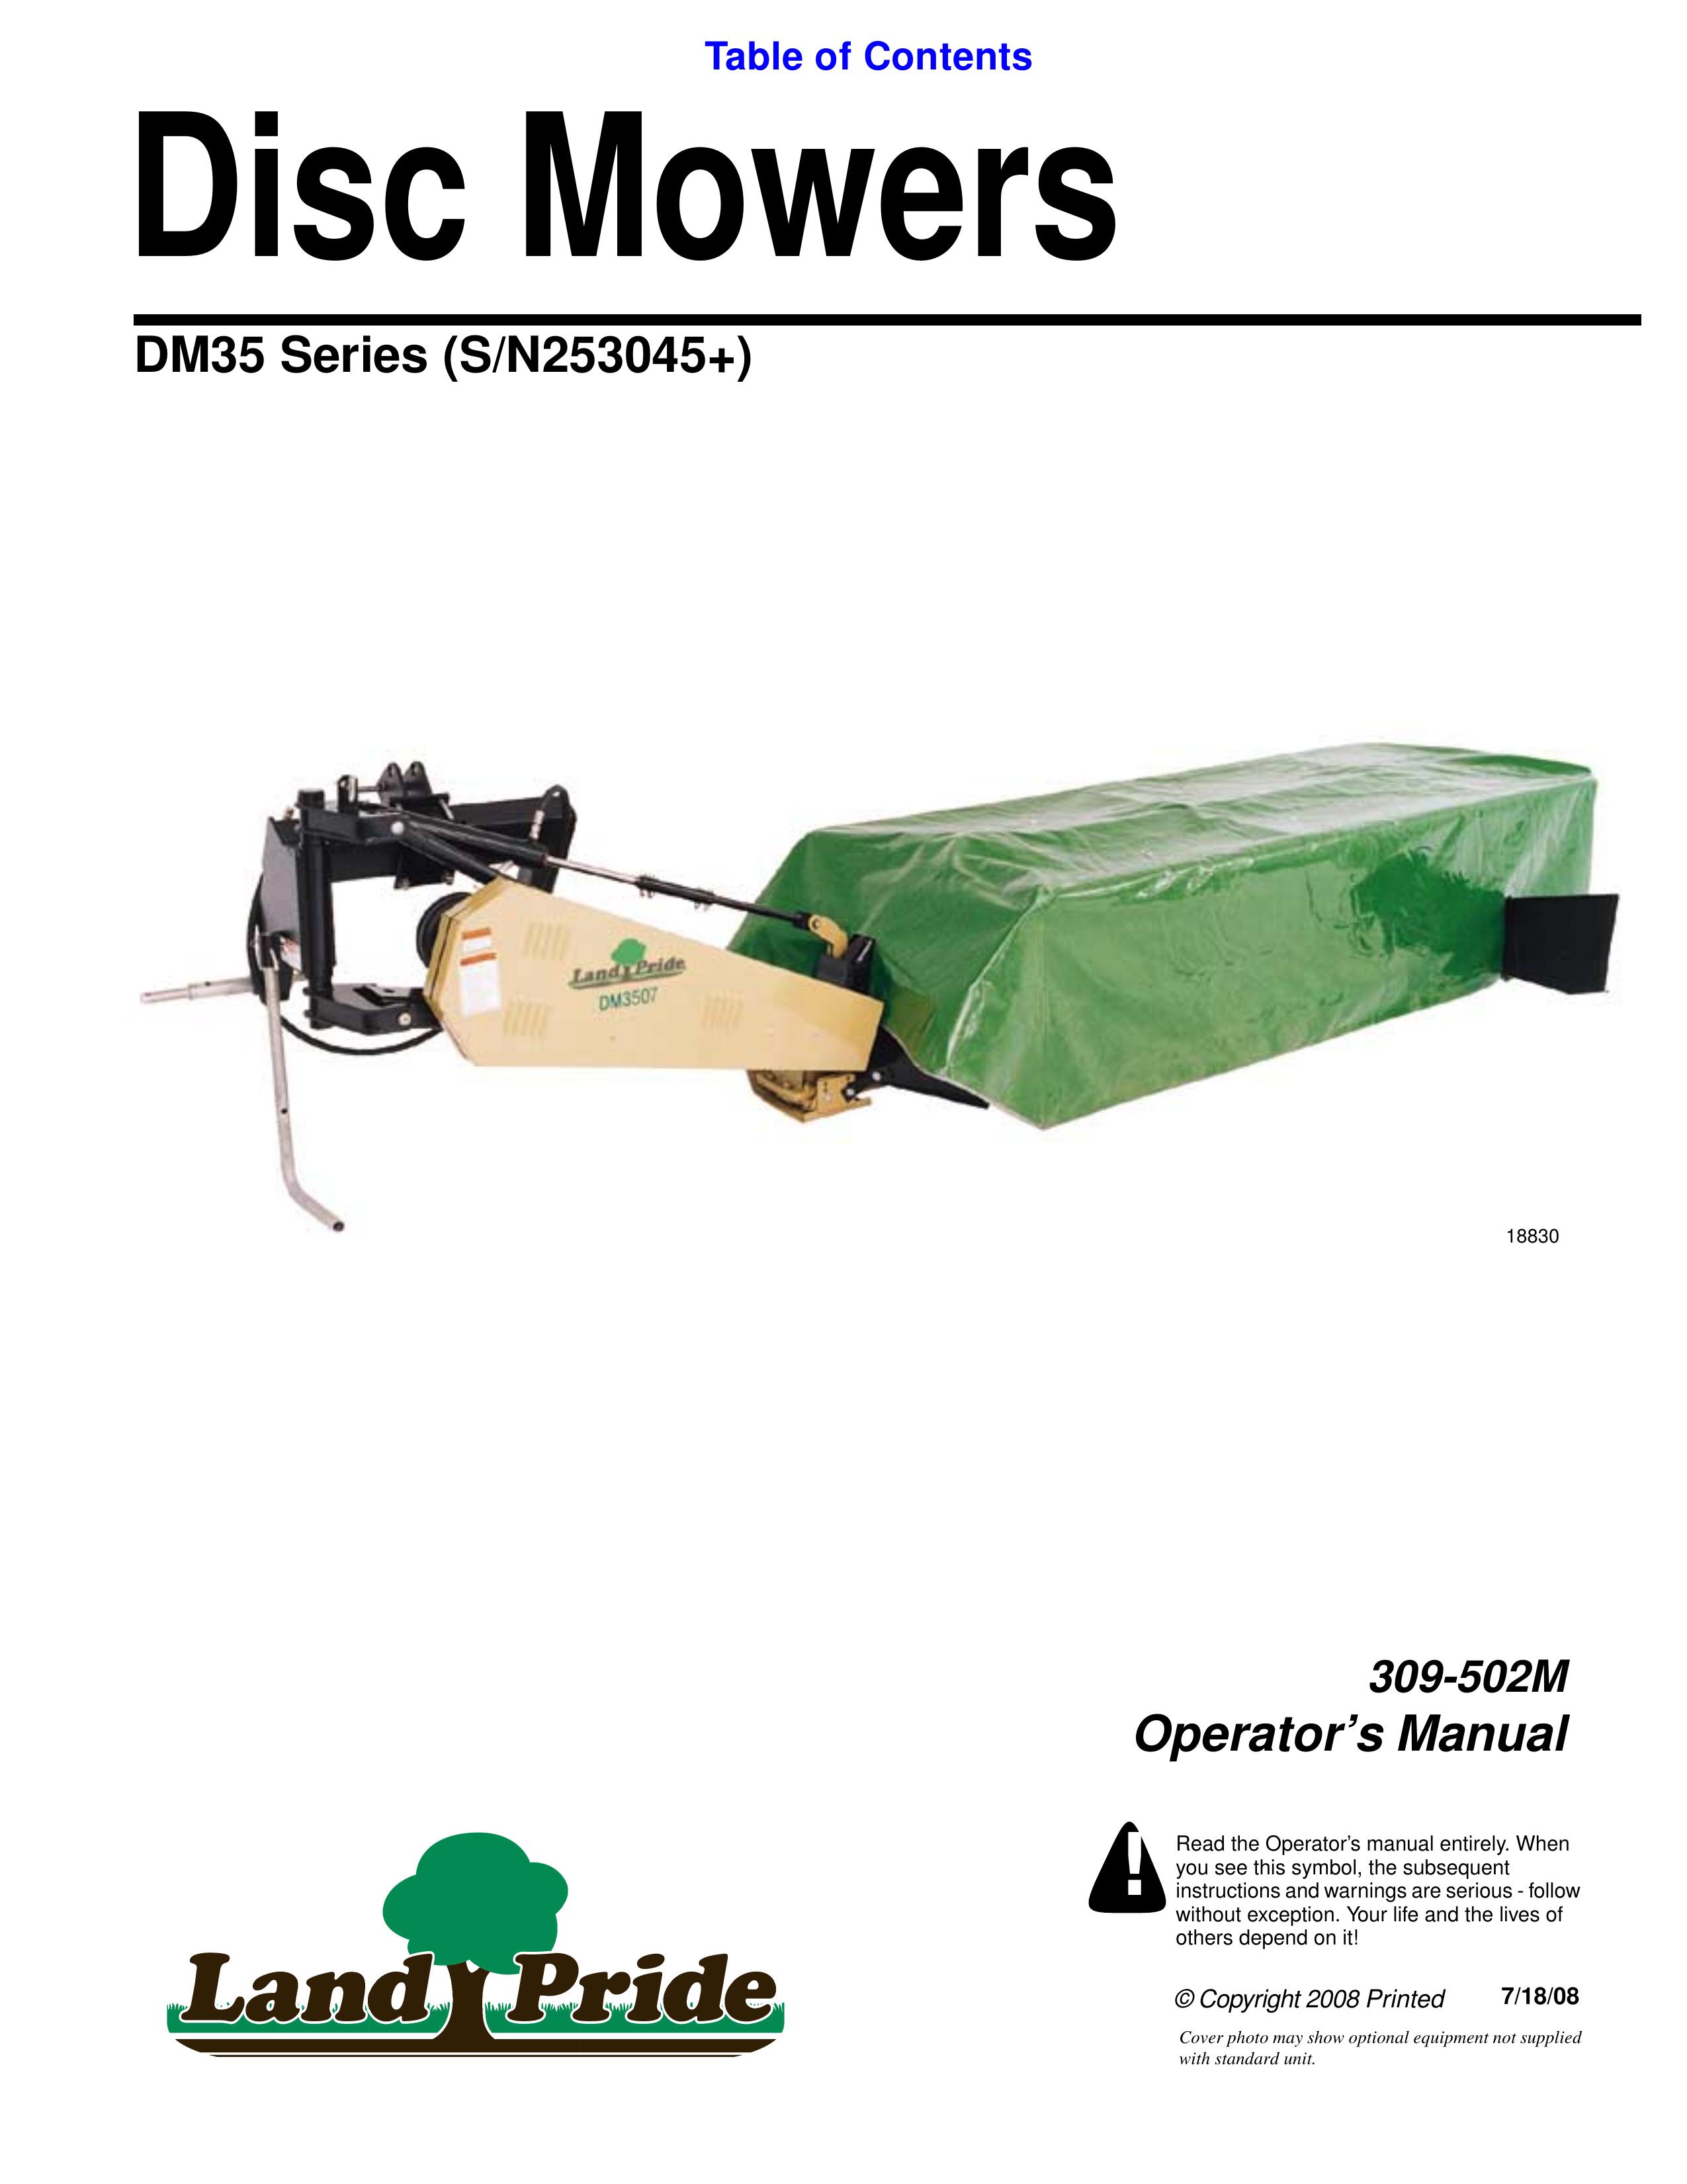 Land Pride 309-502M Lawn Mower User Manual